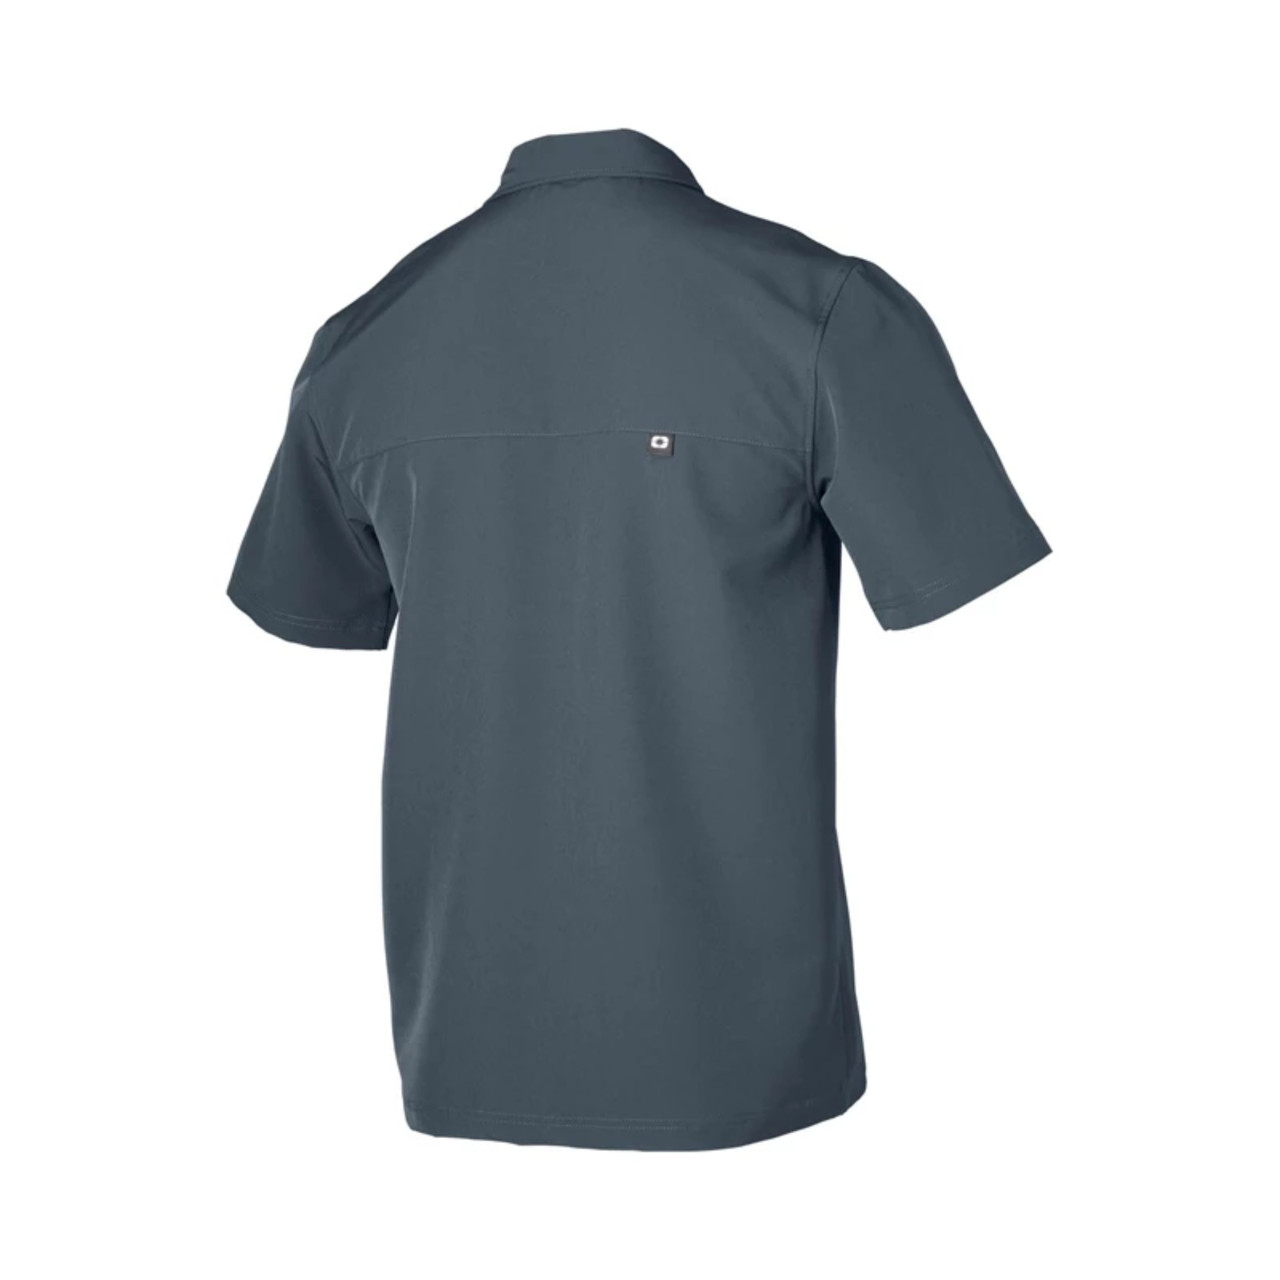 Polaris New OEM Pit Shirt, Men's Extra Large, 283304309